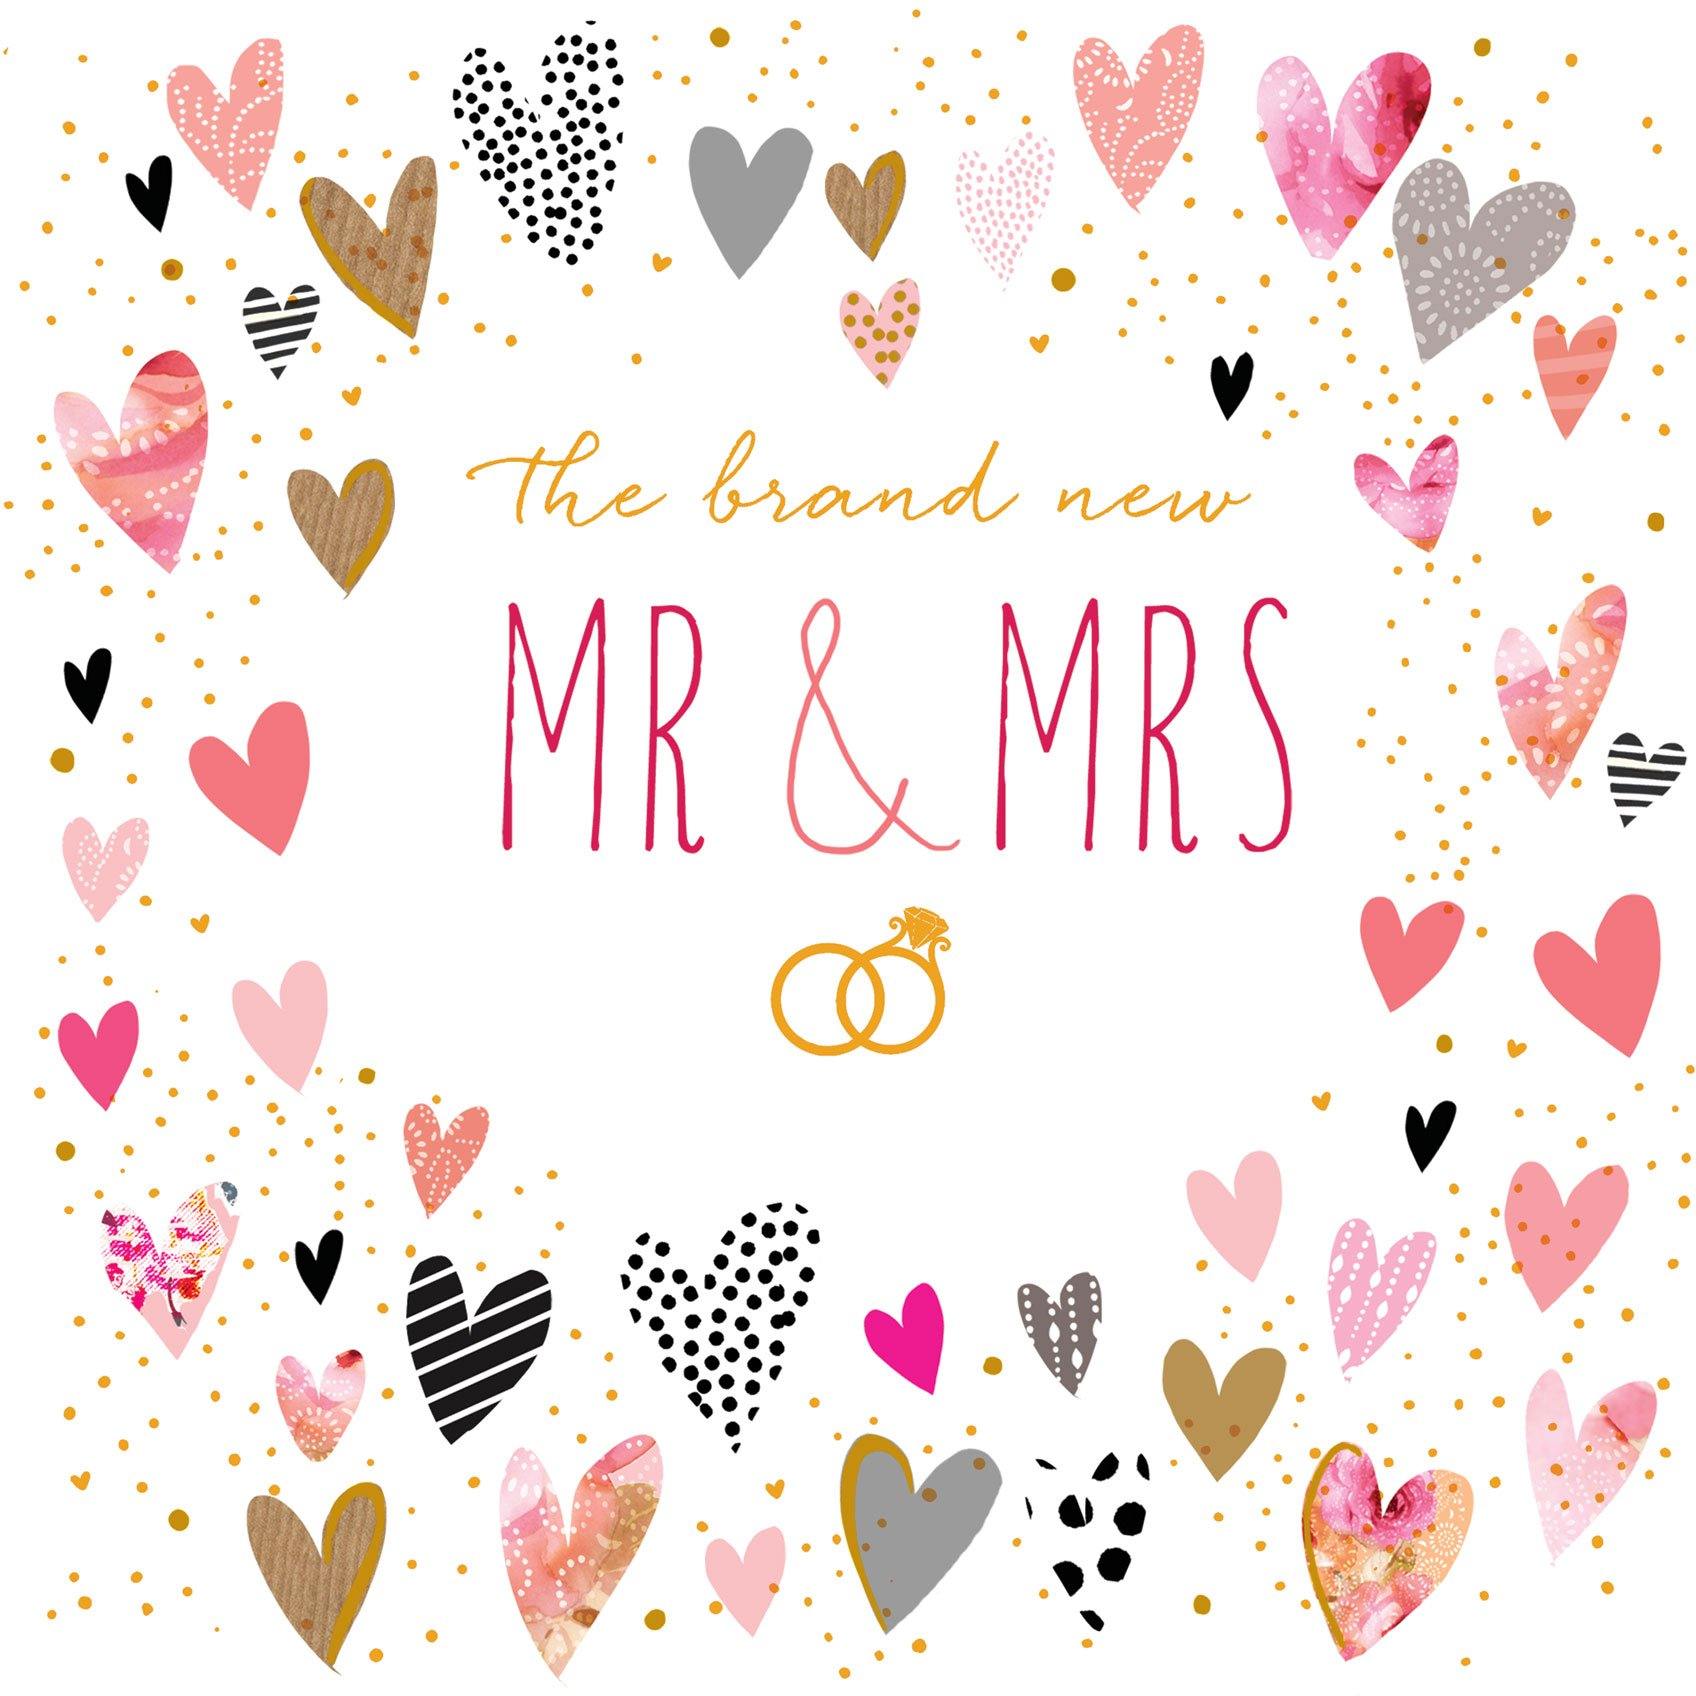 The Brand New Mr & Mrs Wedding Card - Penny Black